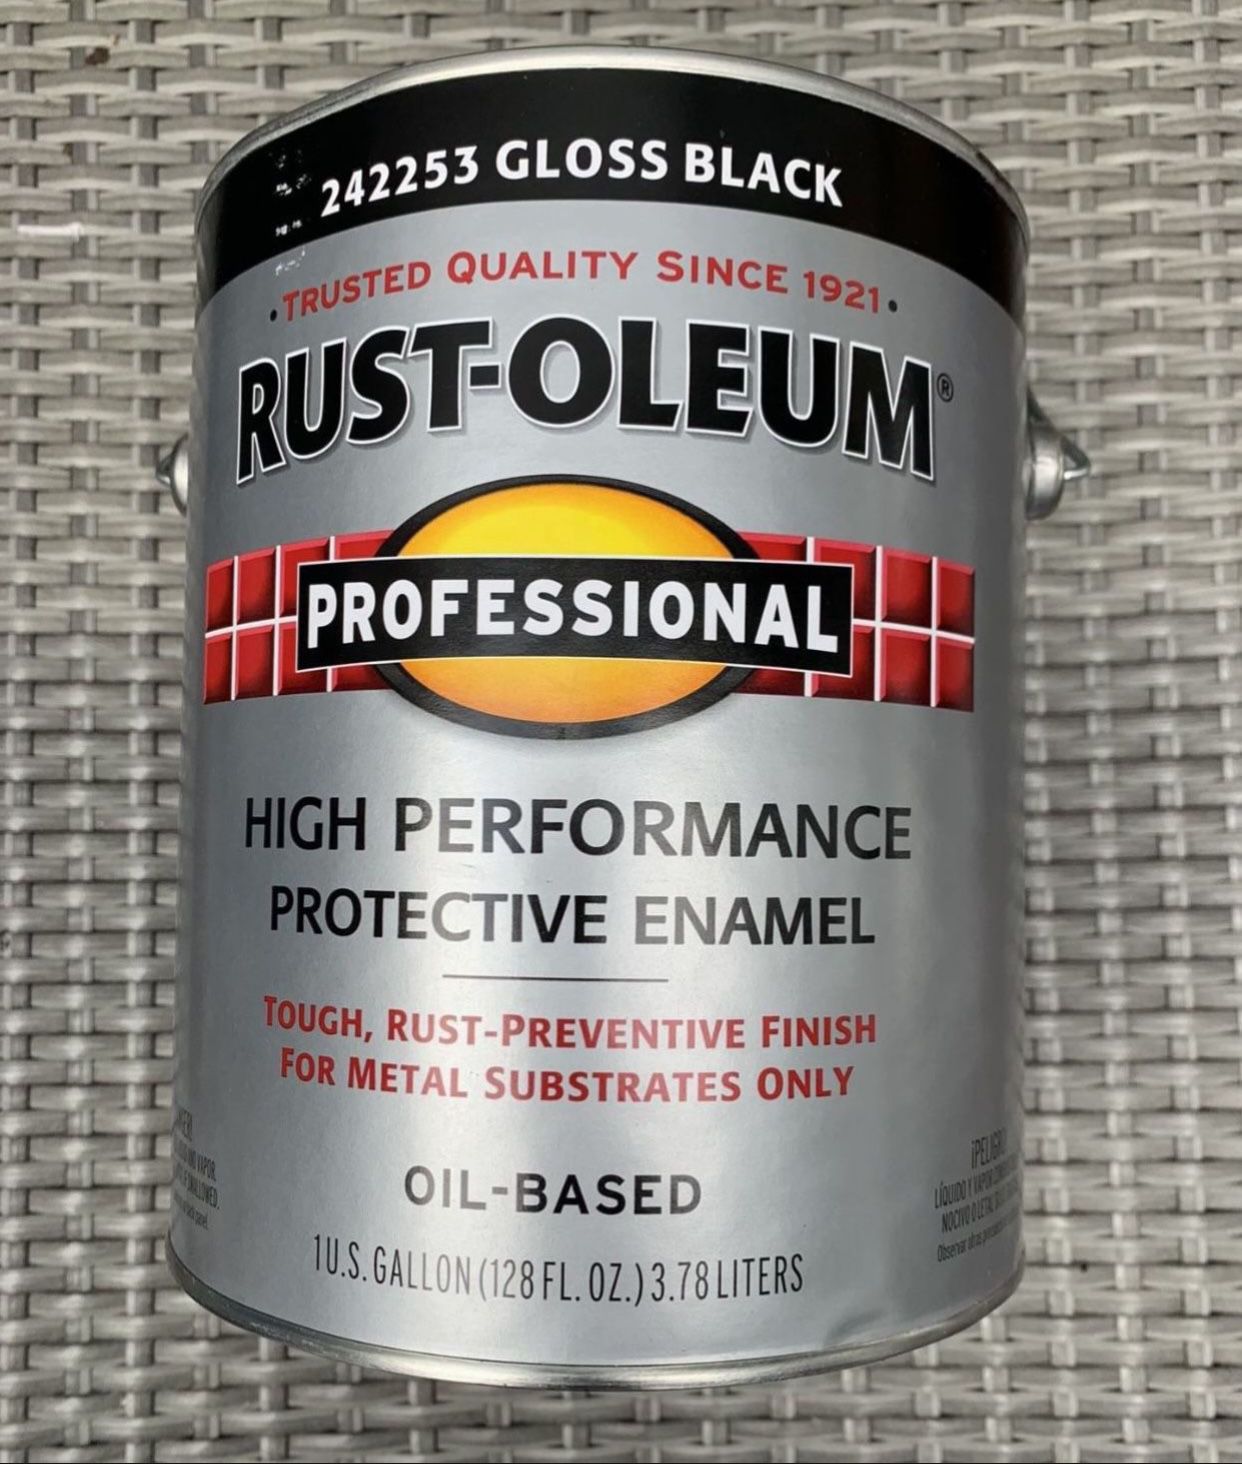 Rust-Oleum Professional 1 gal. High Performance Protective Enamel